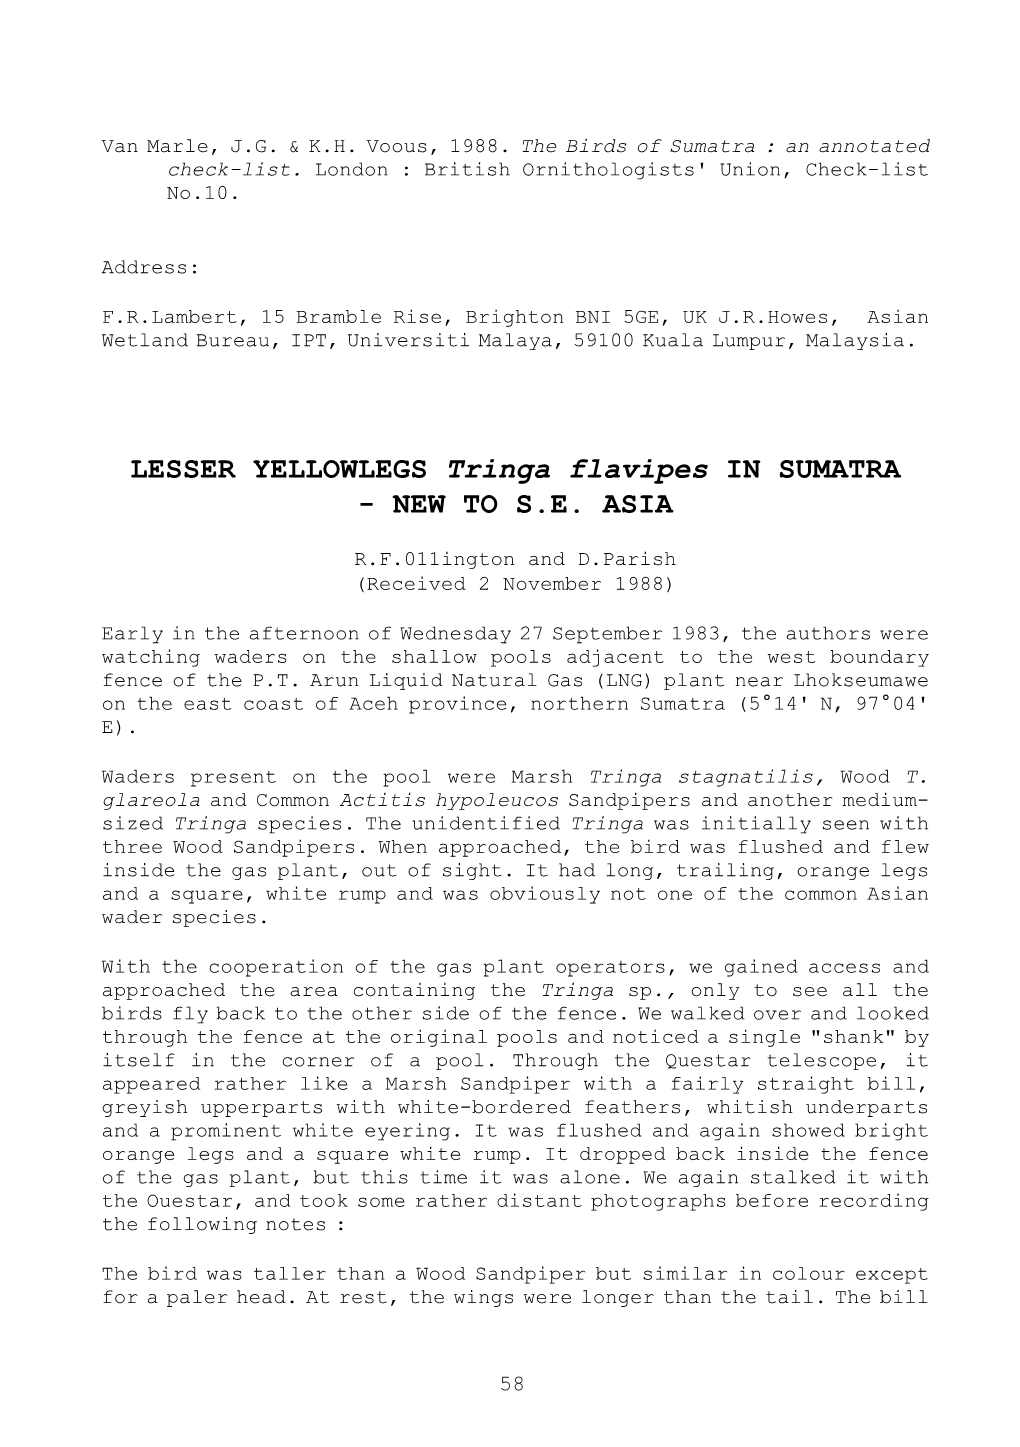 LESSER YELLOWLEGS Tringa Flavipes in SUMATRA - NEW to S.E